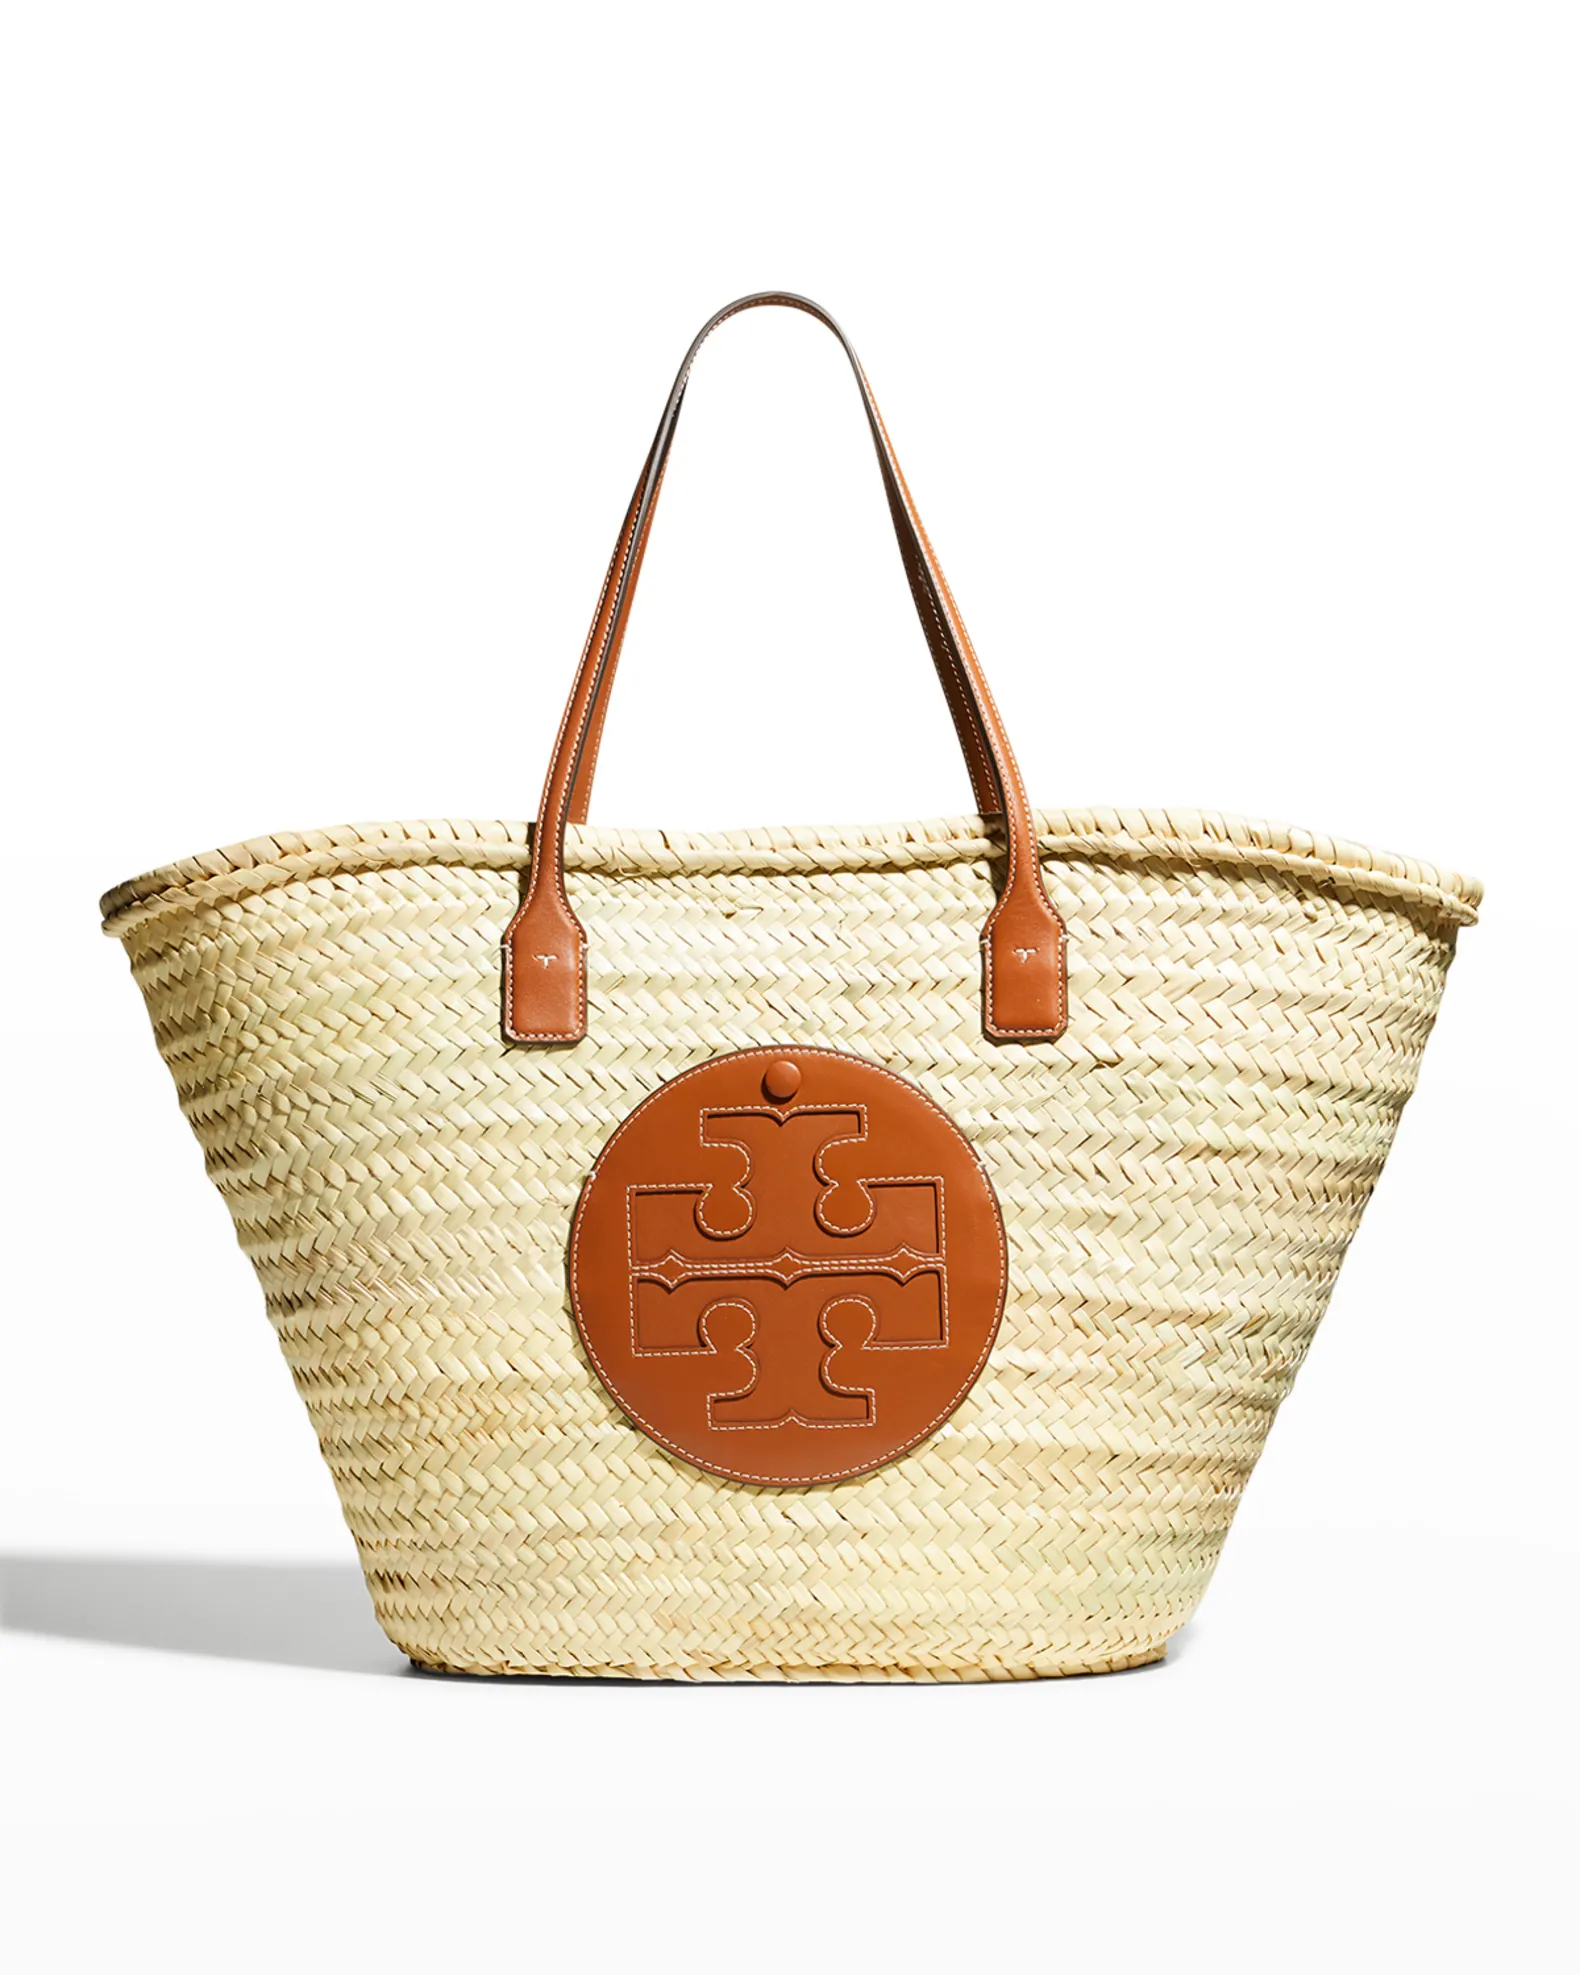 Bestselling Handbags on Sale - neiman marcus